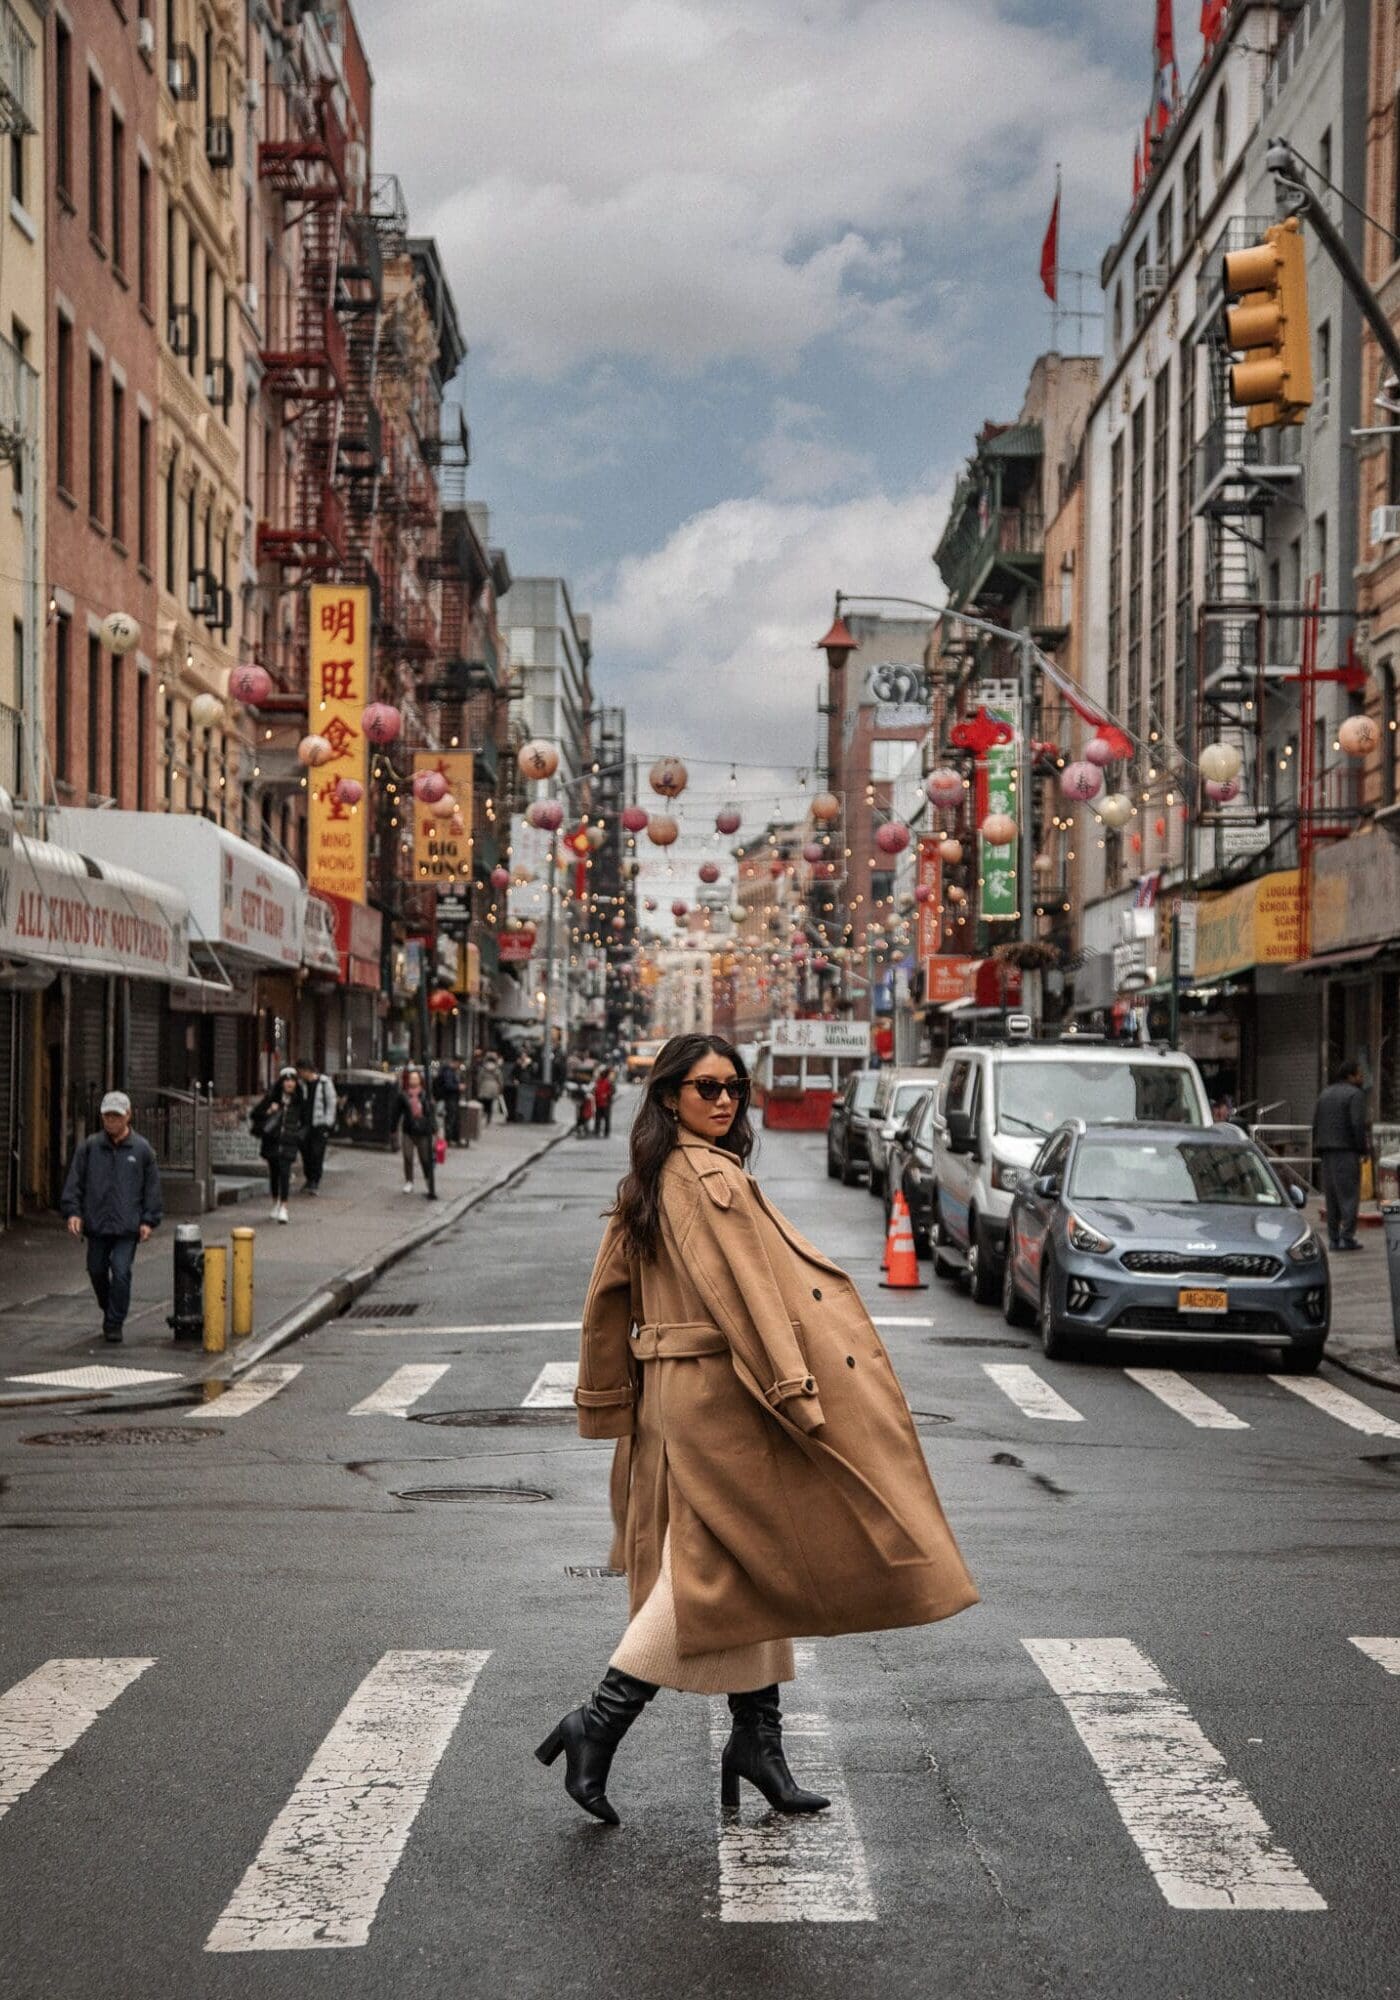 Chinatown New York NYC Photo Spots